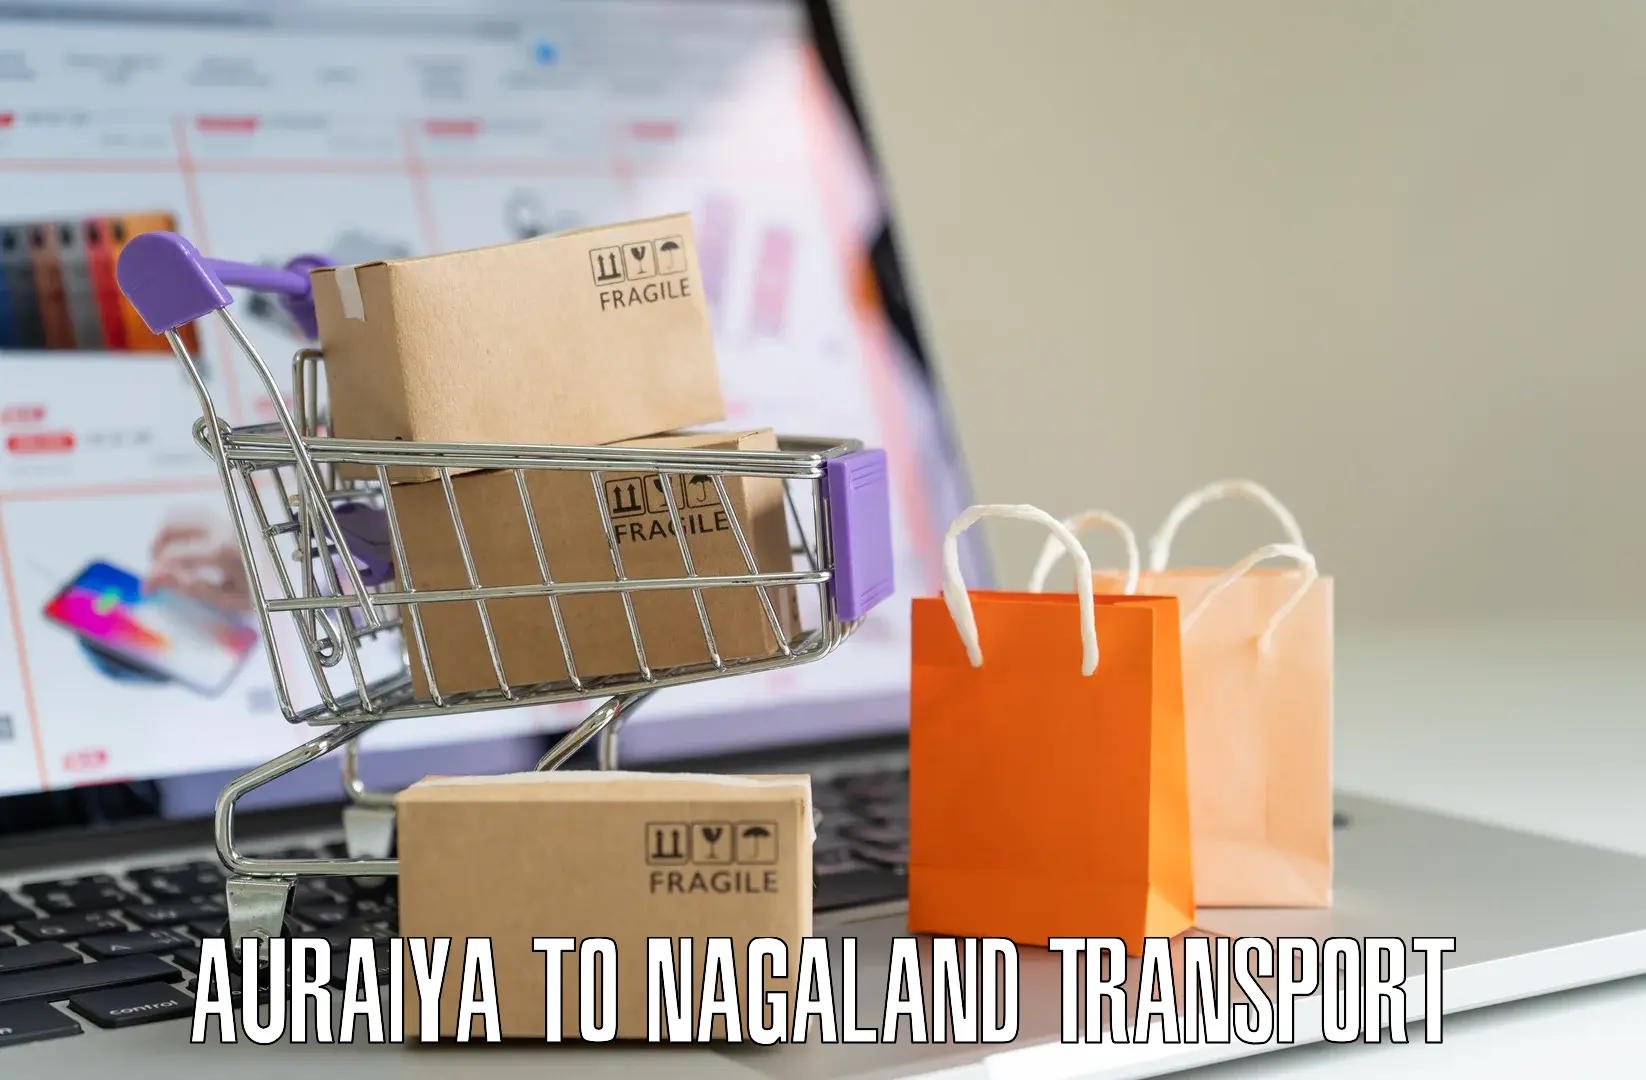 Nearby transport service Auraiya to Nagaland